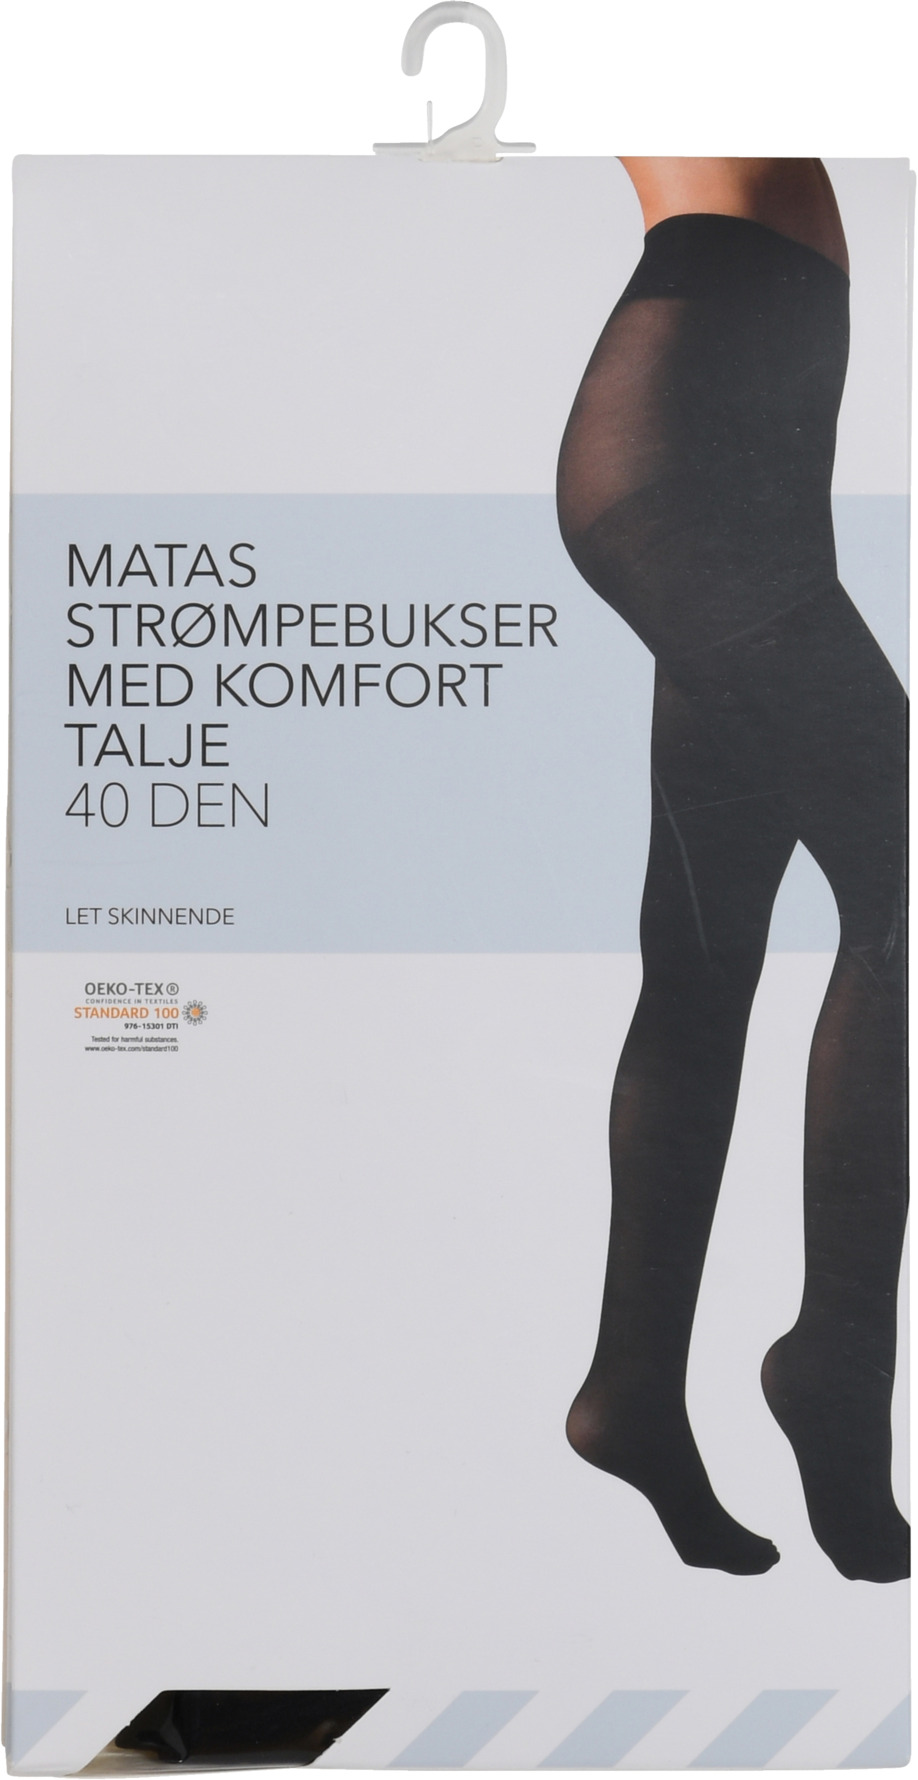 Matas Strømper Køb serie online hos Matas.dk